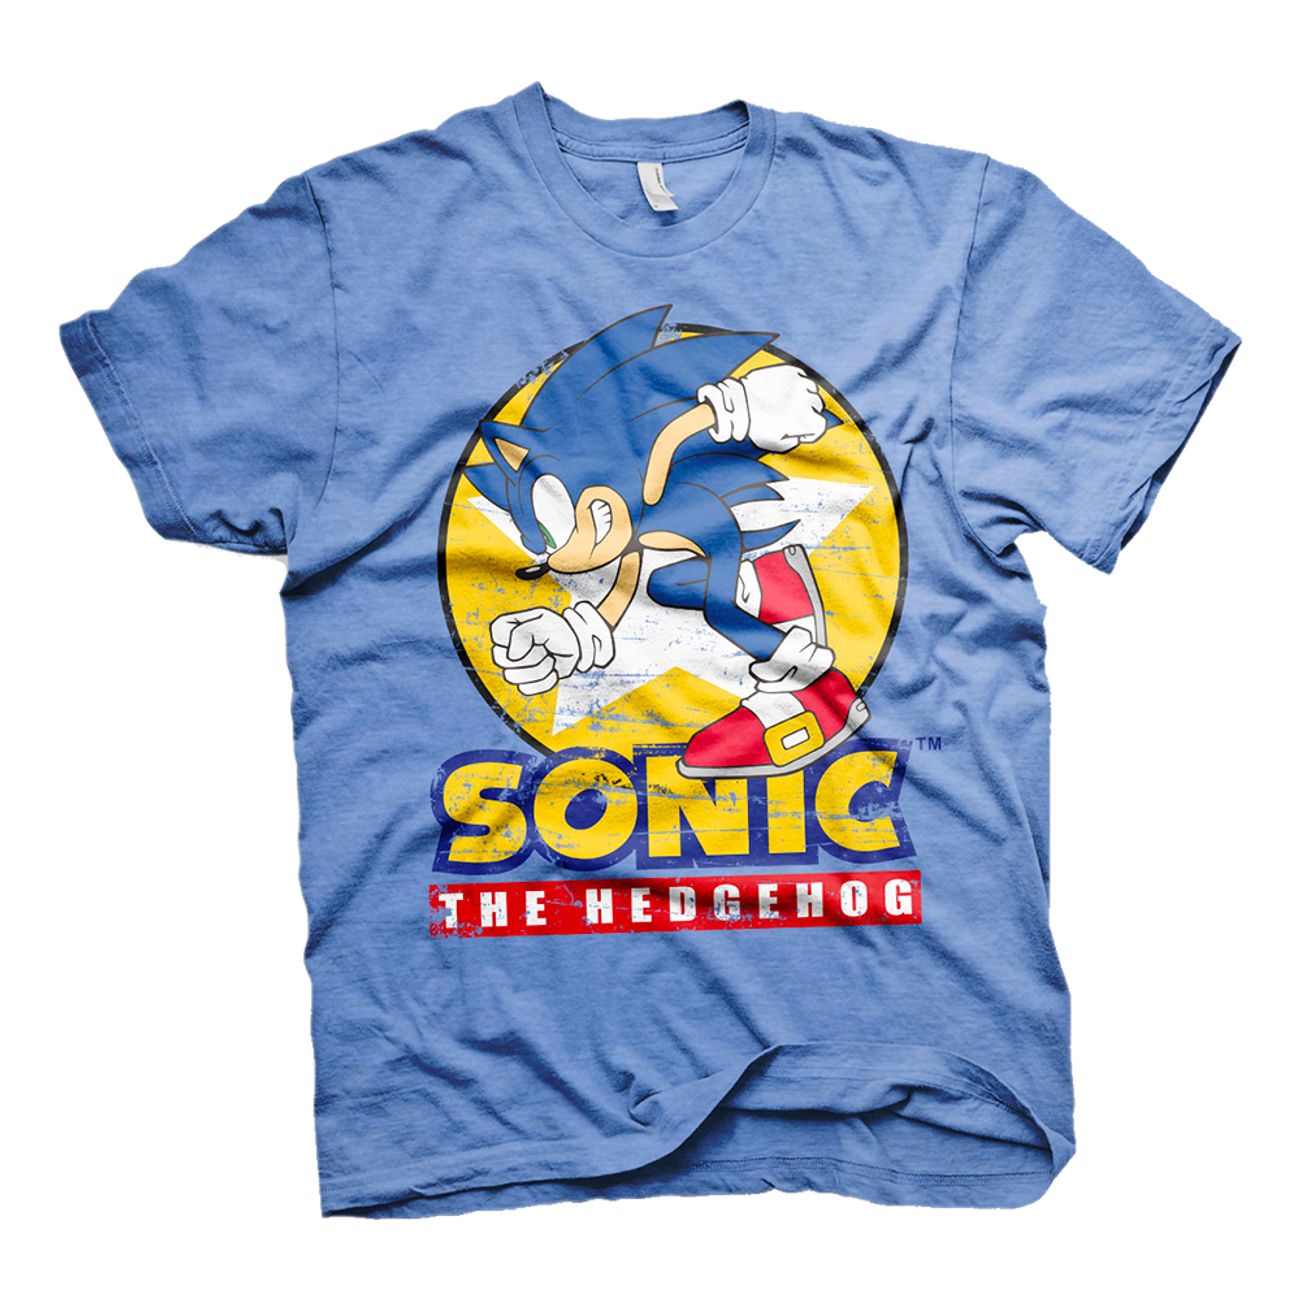 sonic-the-hedgehog-t-shirt-74816-1